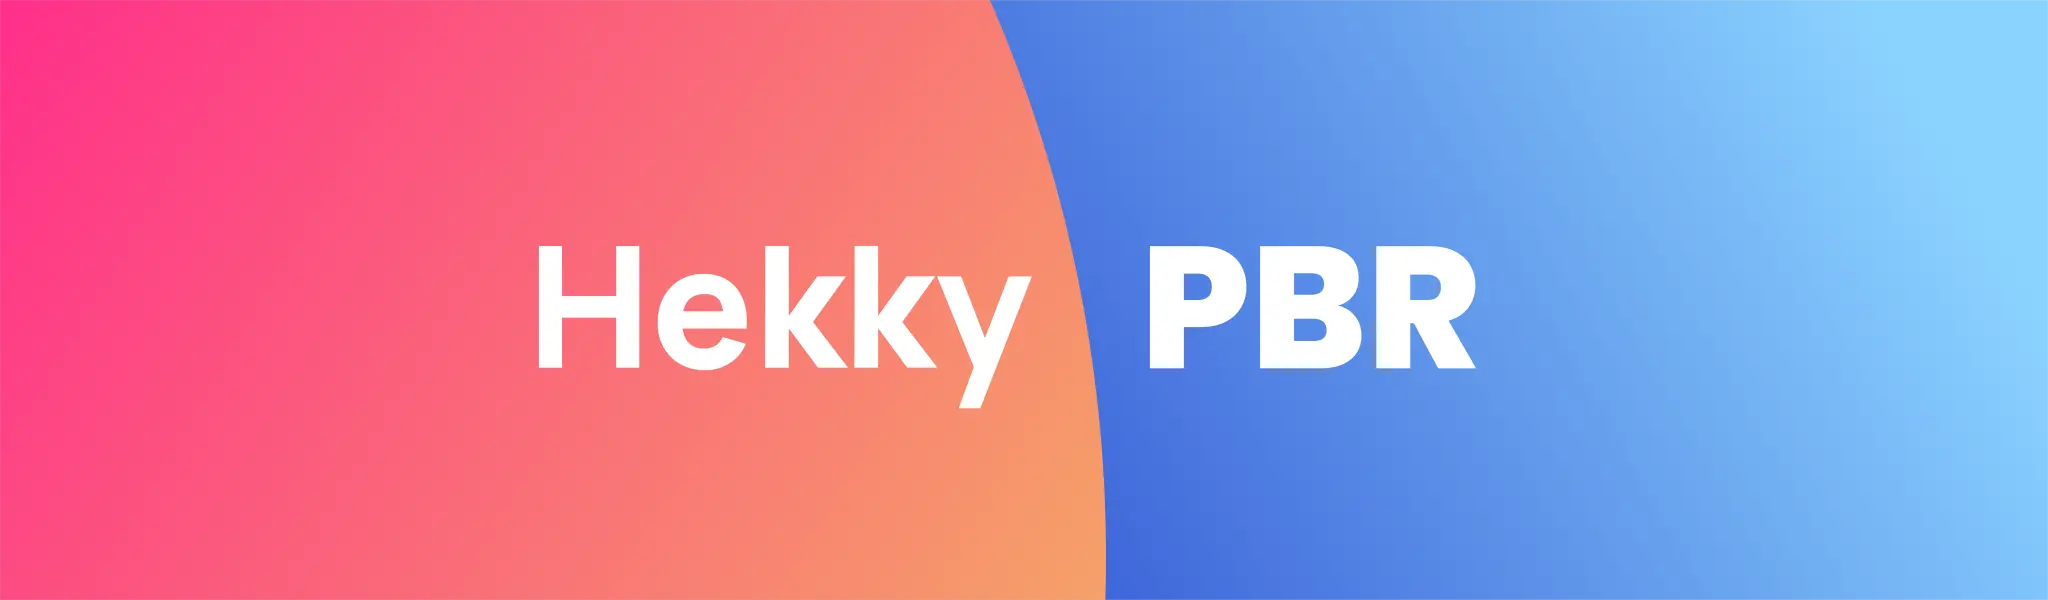 Hekky PBR Logo